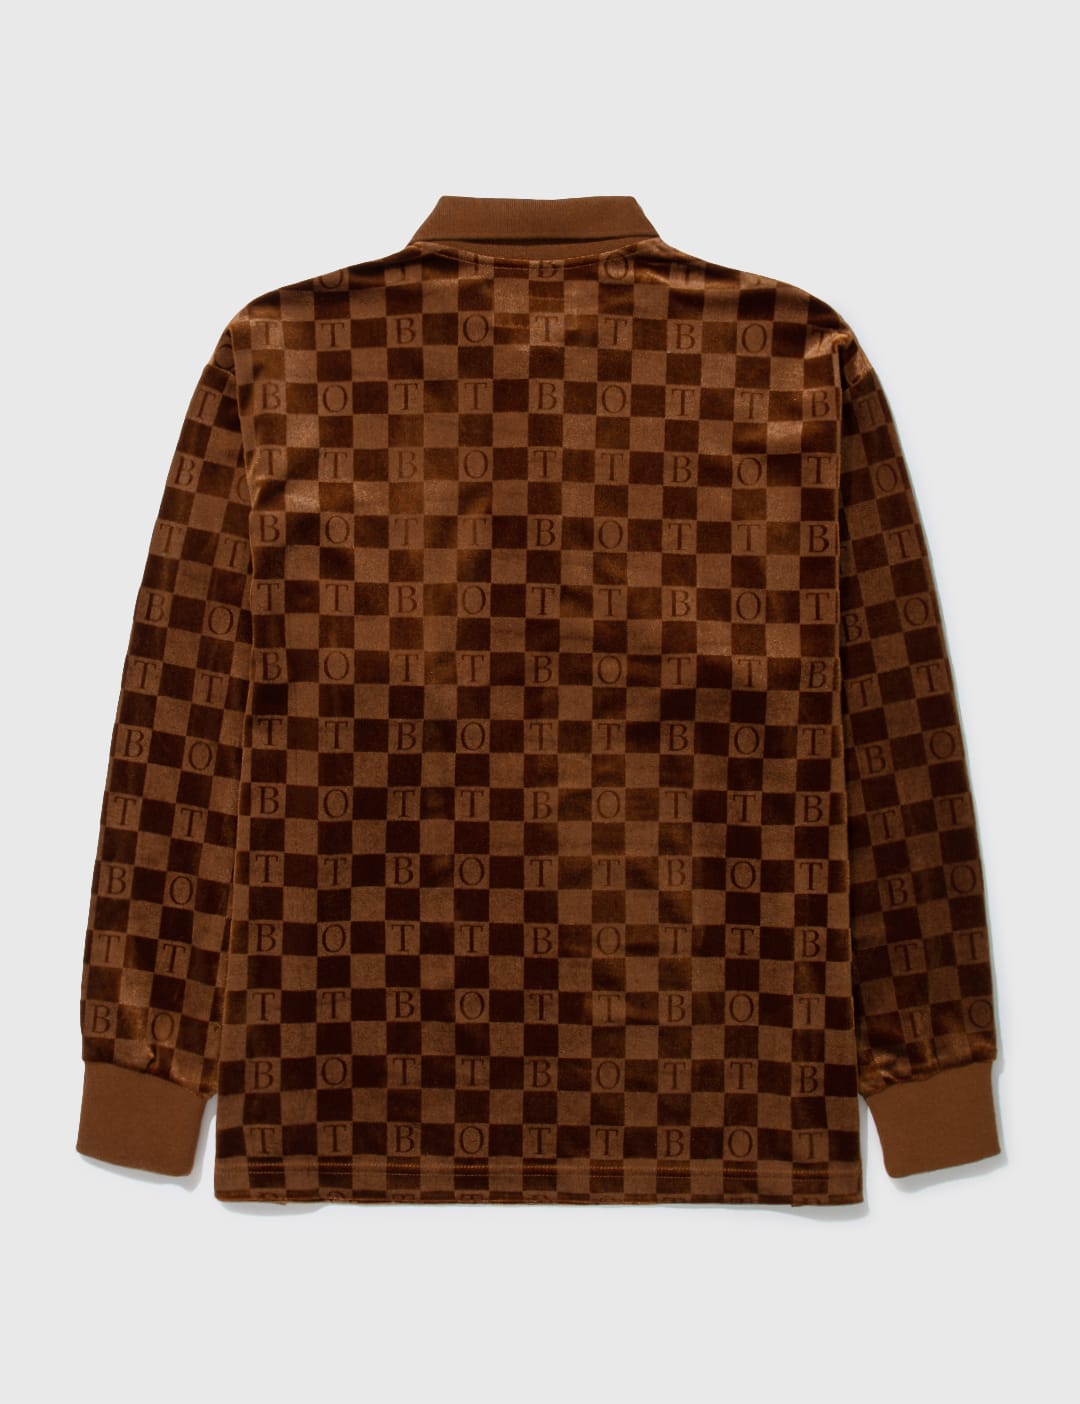 BoTT - Checkerboard Velour Polo Shirt | HBX - Globally Curated 